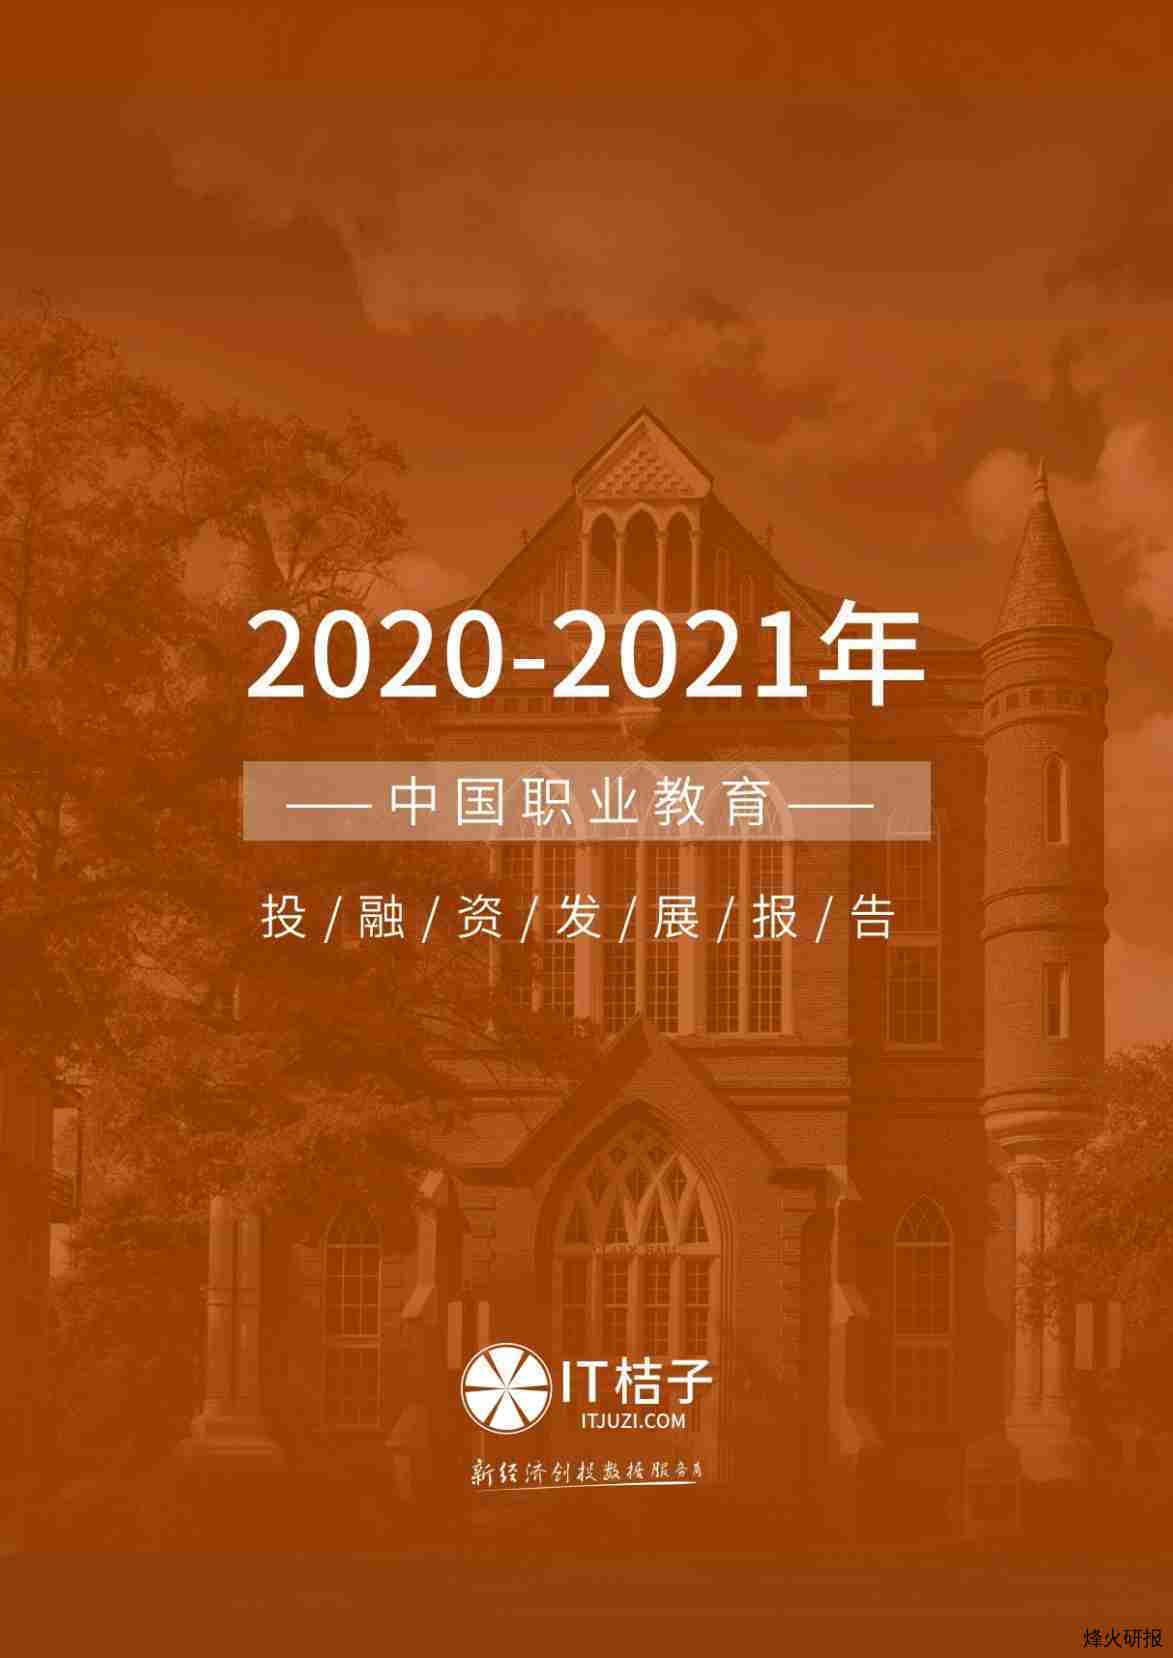 【IT桔子】《2020-2021年中国职业教育投融资发展报告》.pdf-第一页